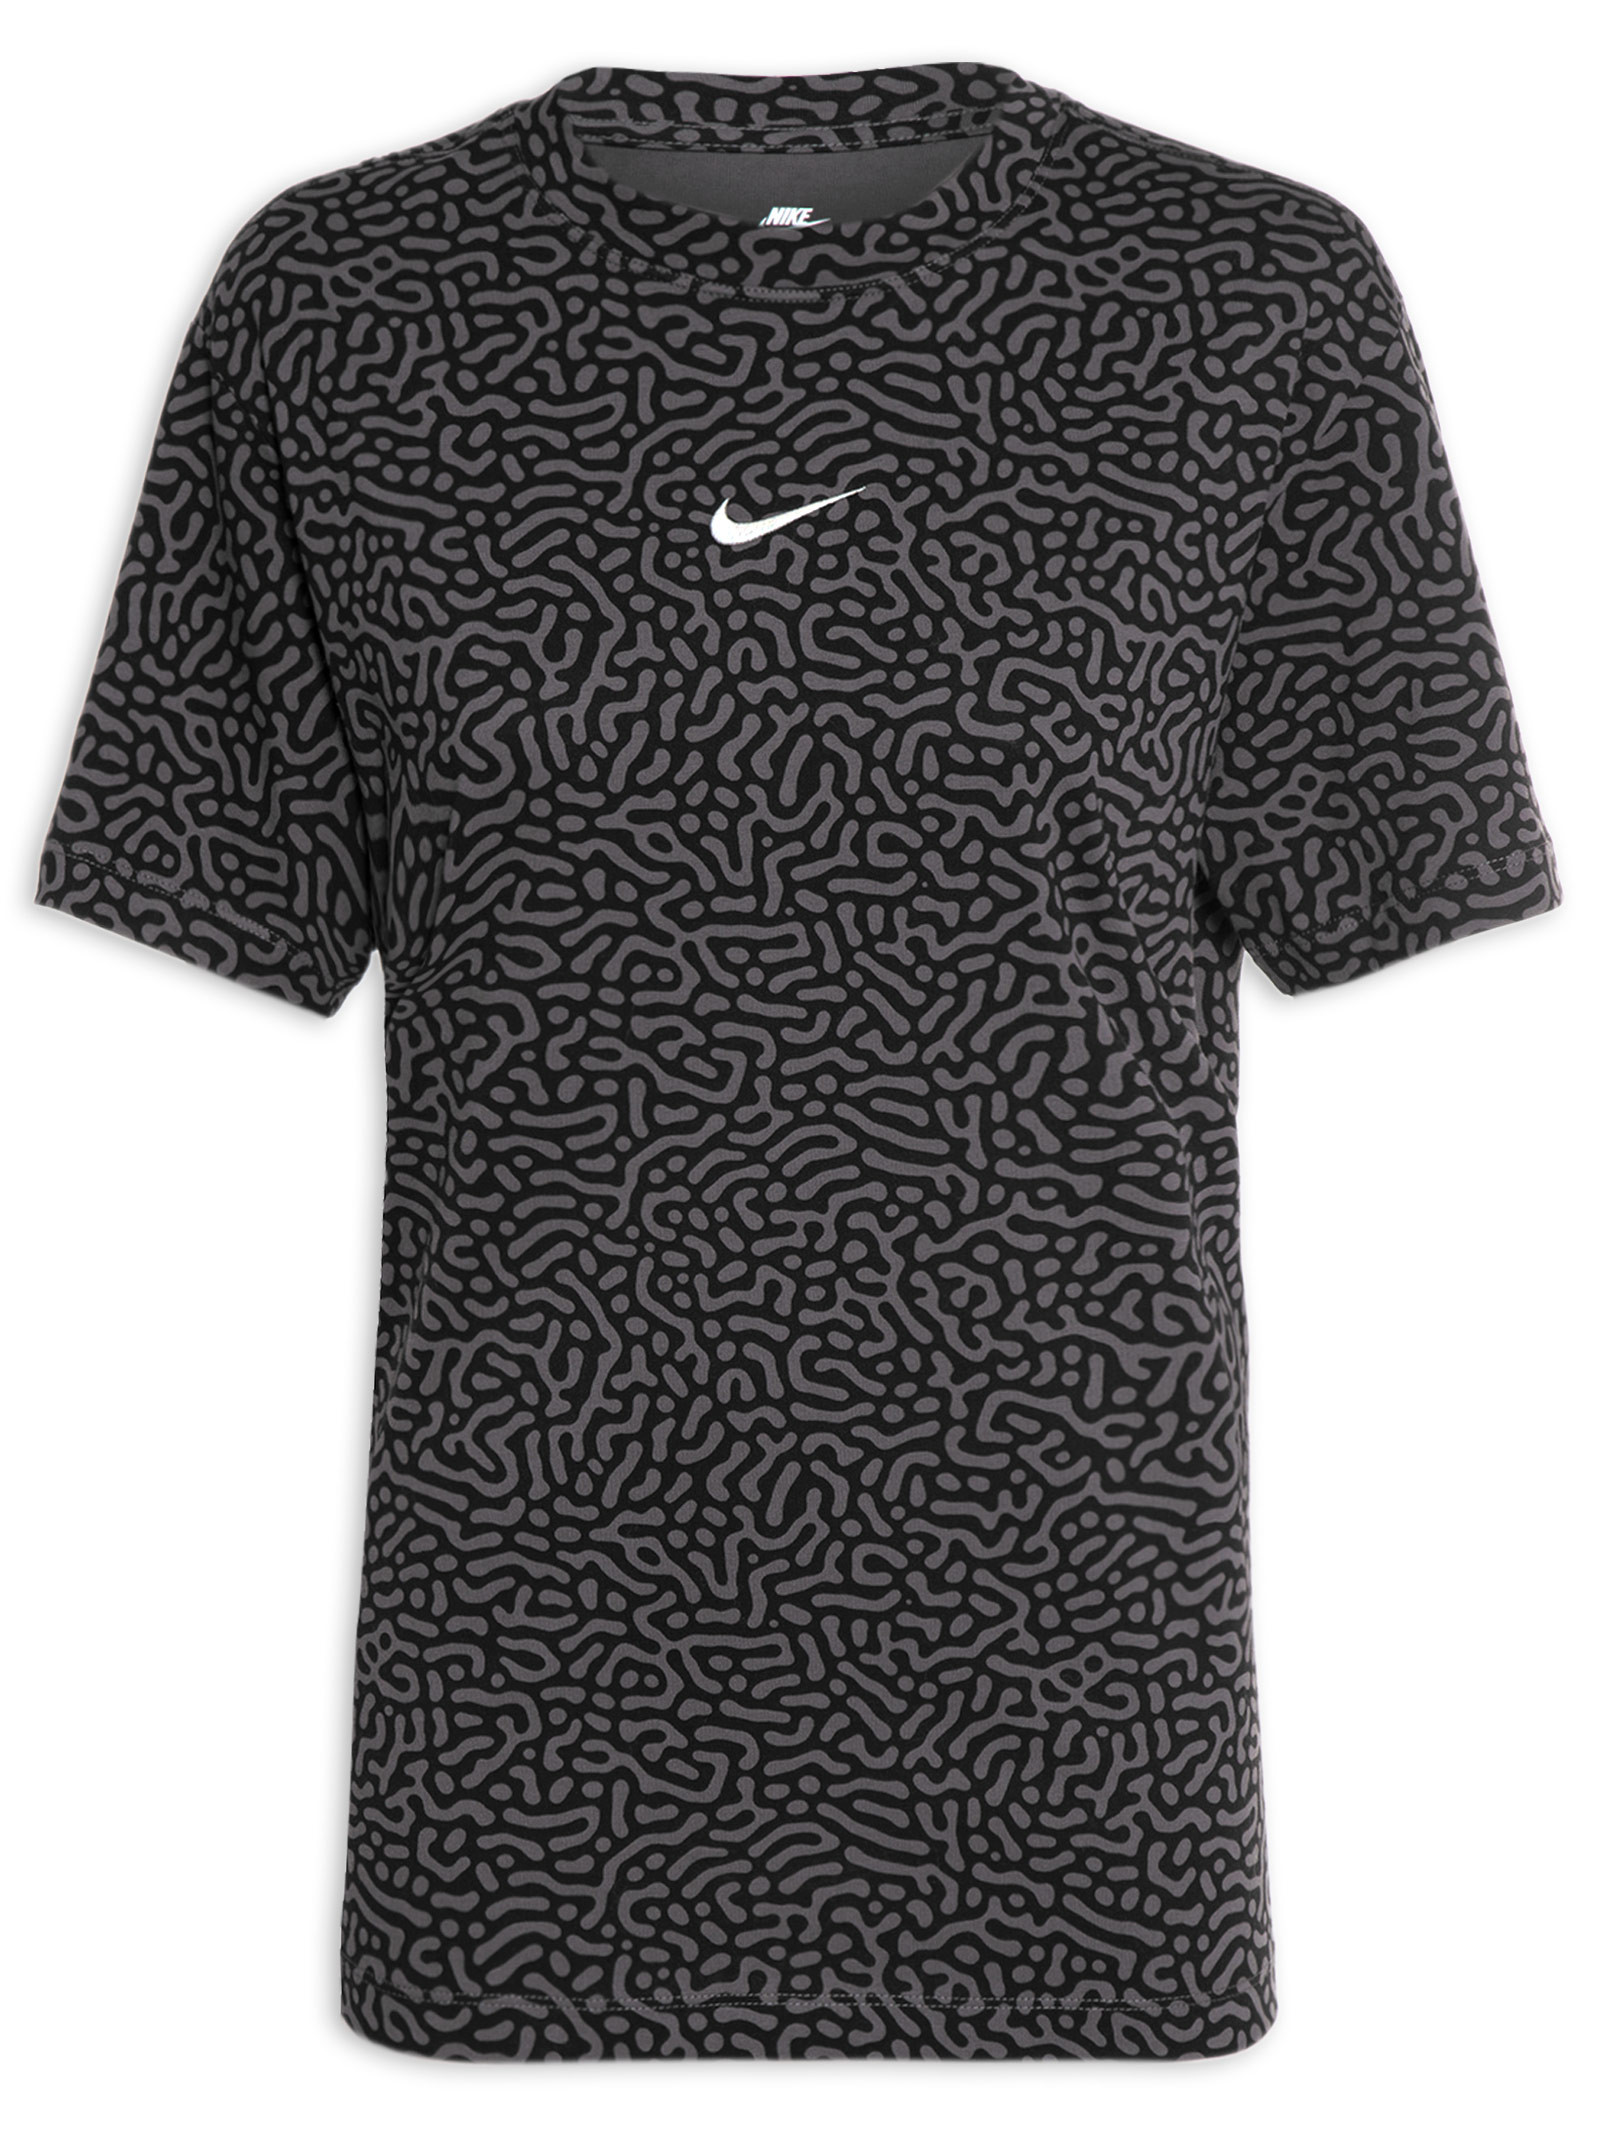 Camiseta Nike Swoosh Animal NSW Preta - Mstock Store